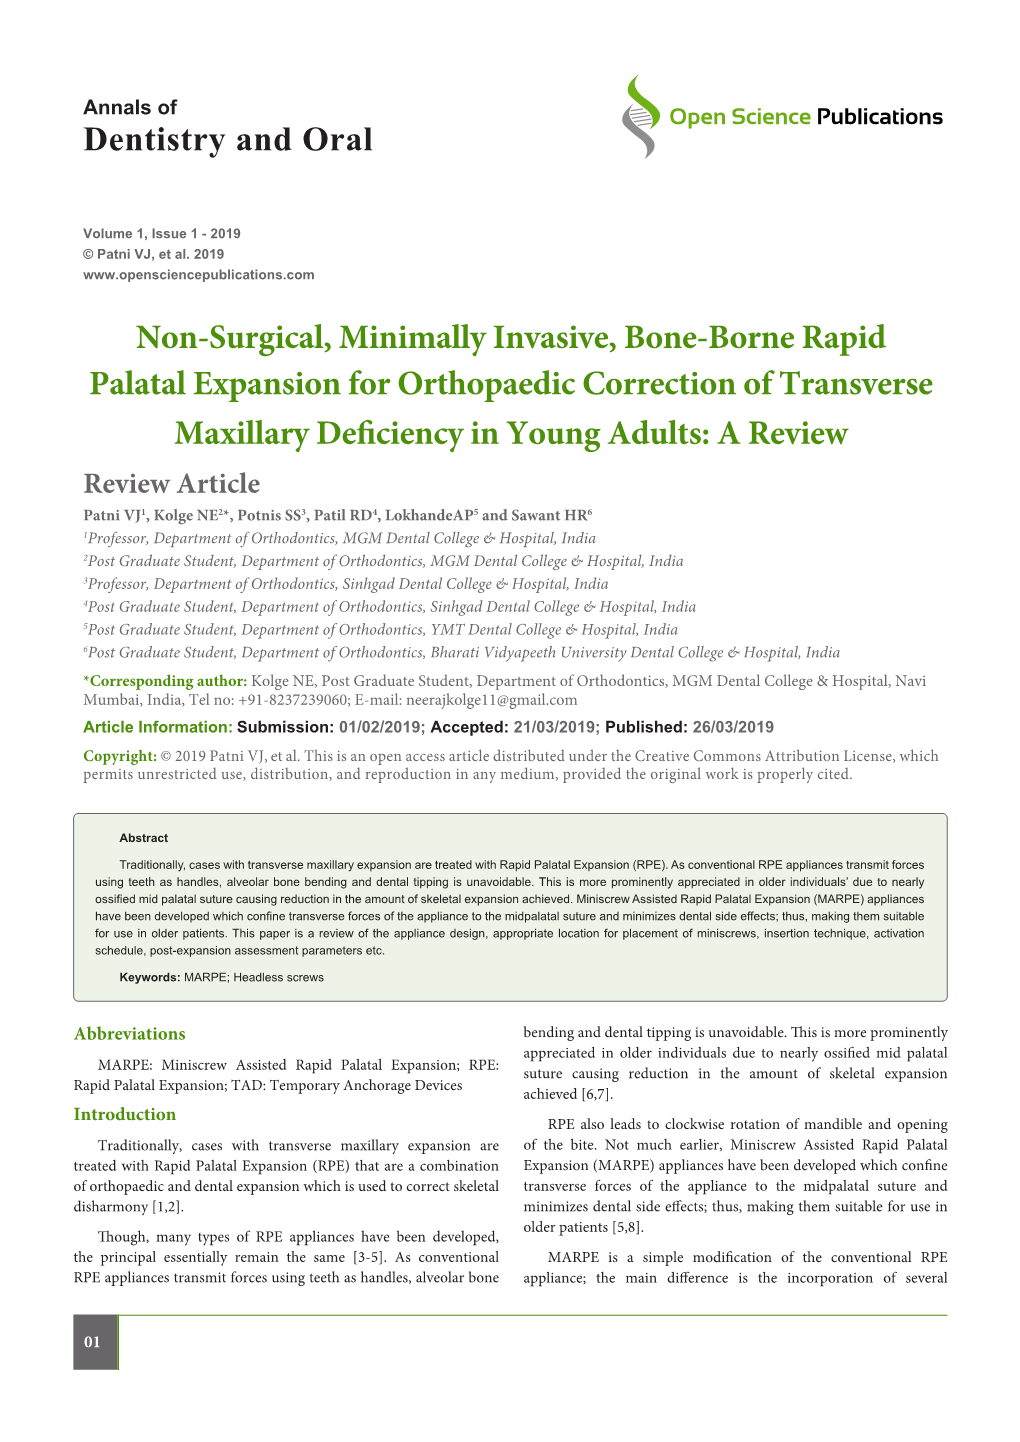 Non-Surgical, Minimally Invasive, Bone-Borne Rapid Palatal Expansion for Orthopaedic Correction of Transverse Maxillary Deficien